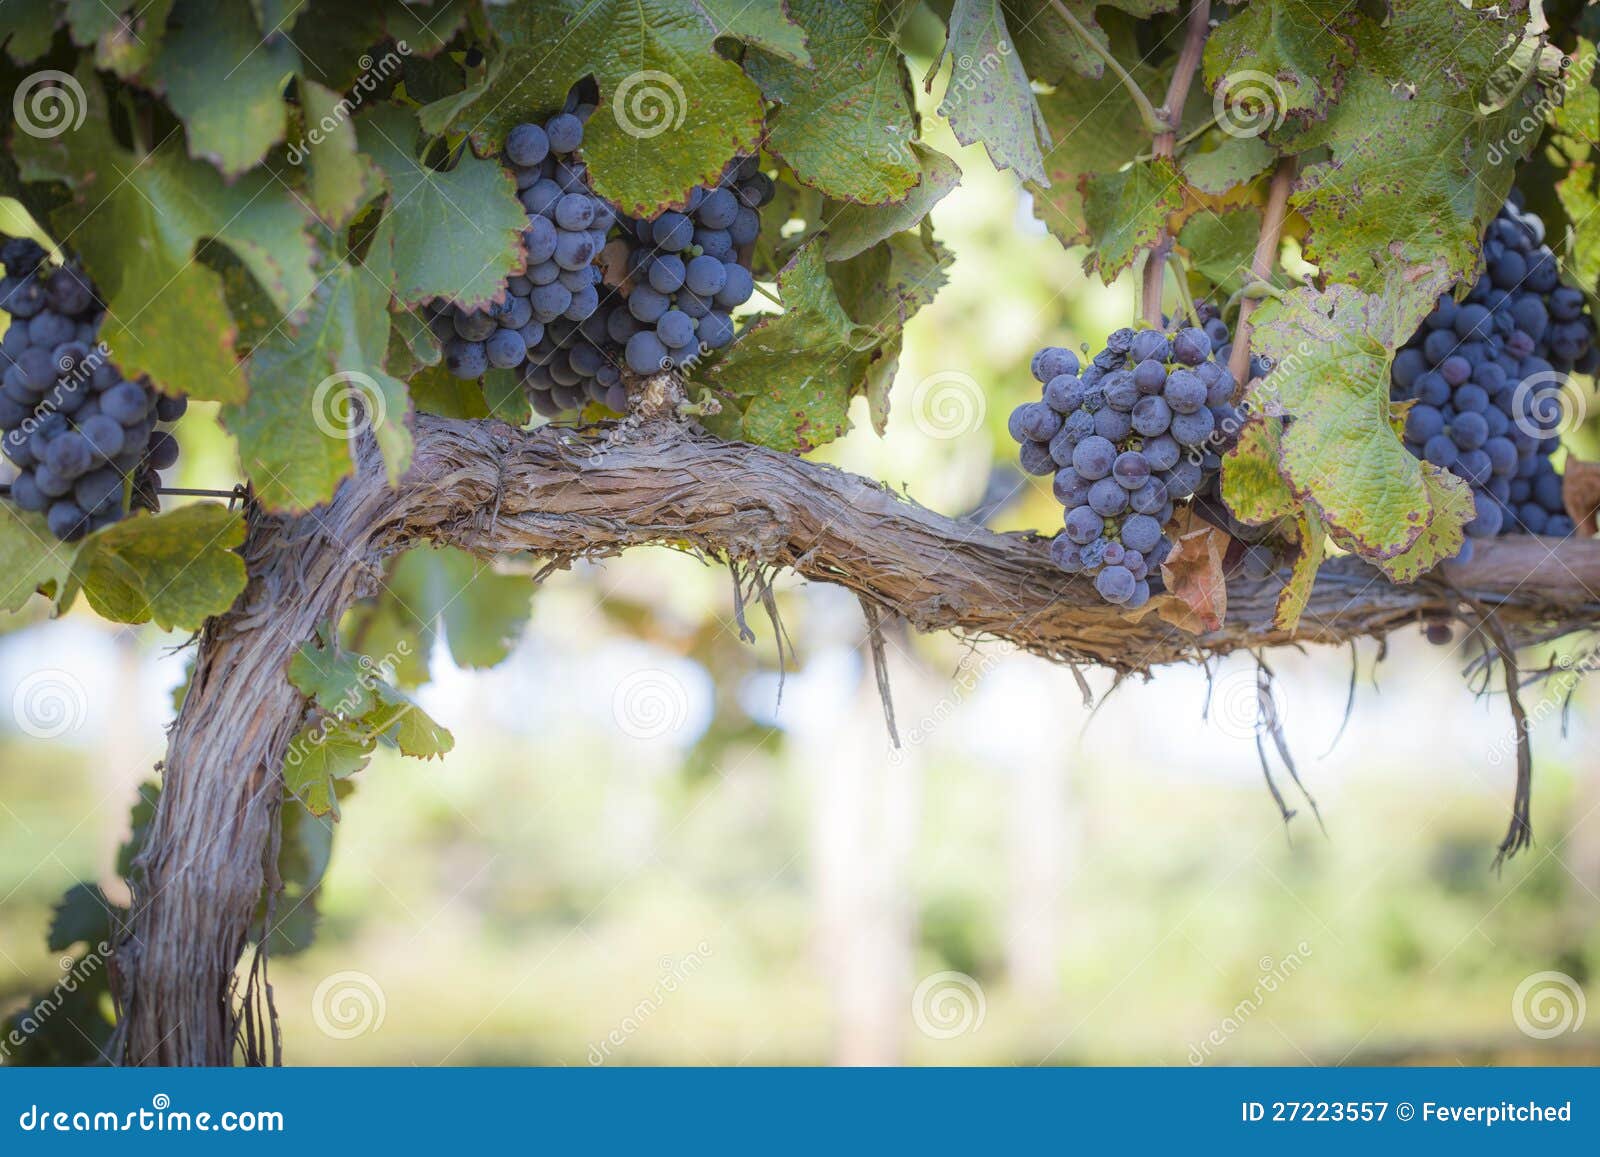 lush, ripe wine grapes on the vine